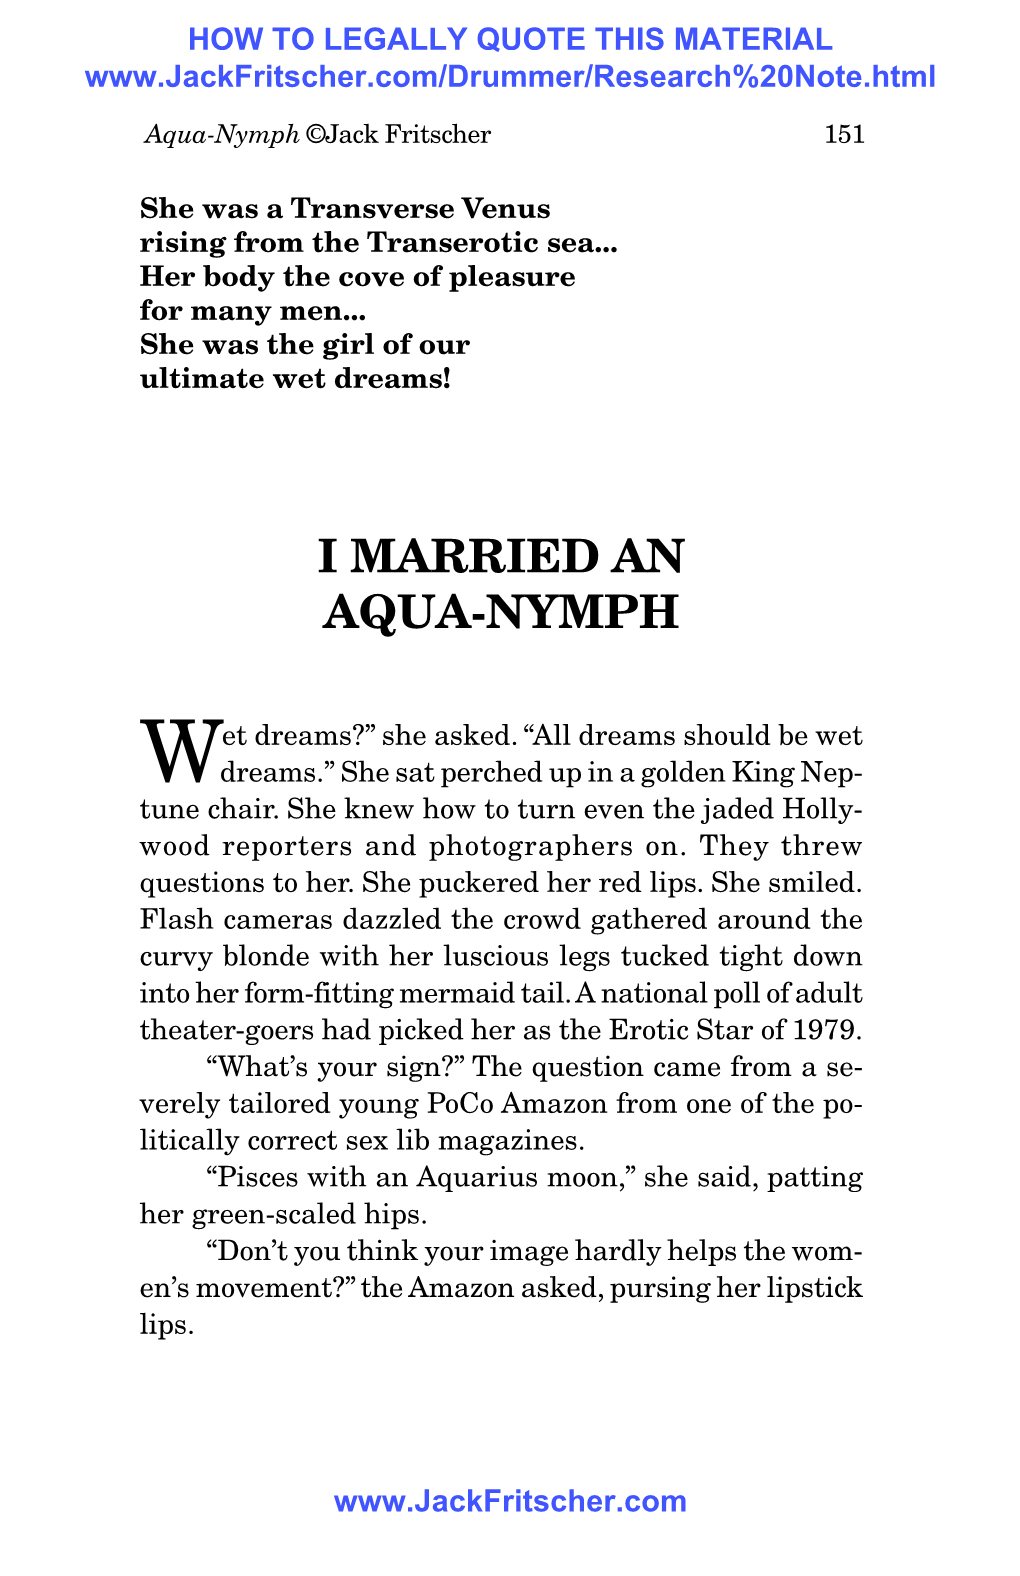 I Married an Aqua-Nymph